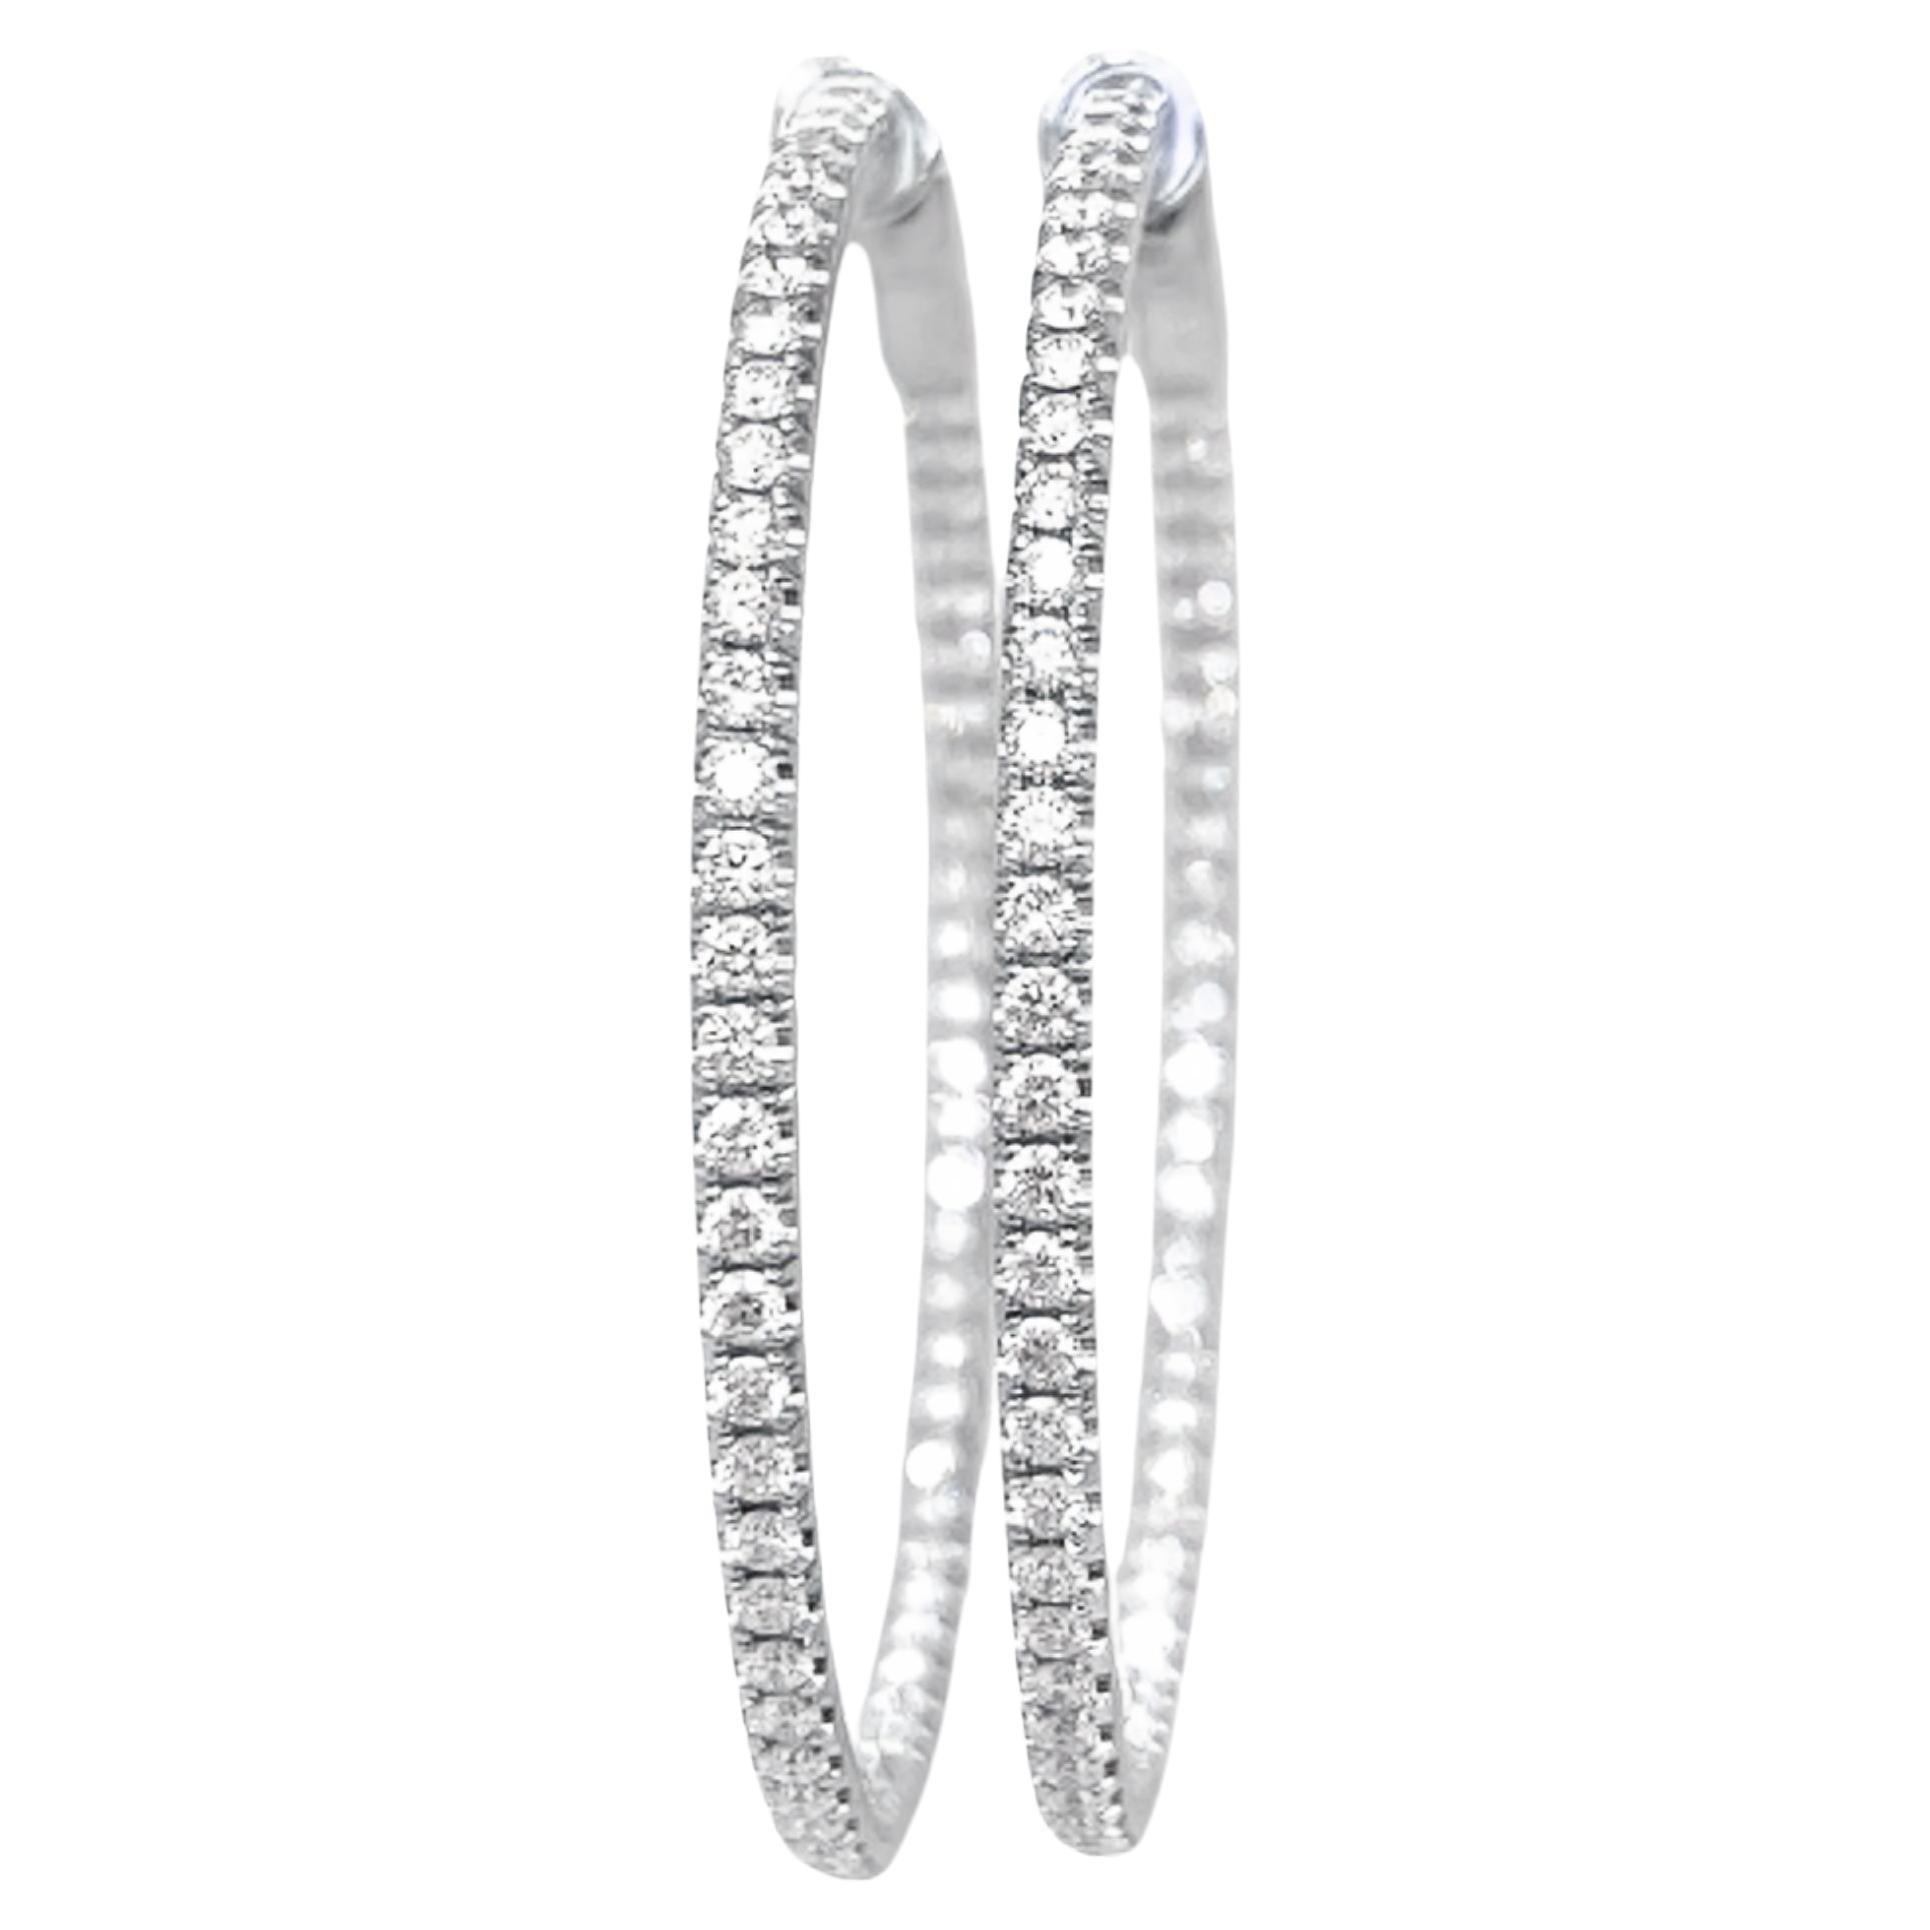 Gems Are Forever 5 carat Diamond Inside-Out Hoop Earrings in 18k Gold For Sale